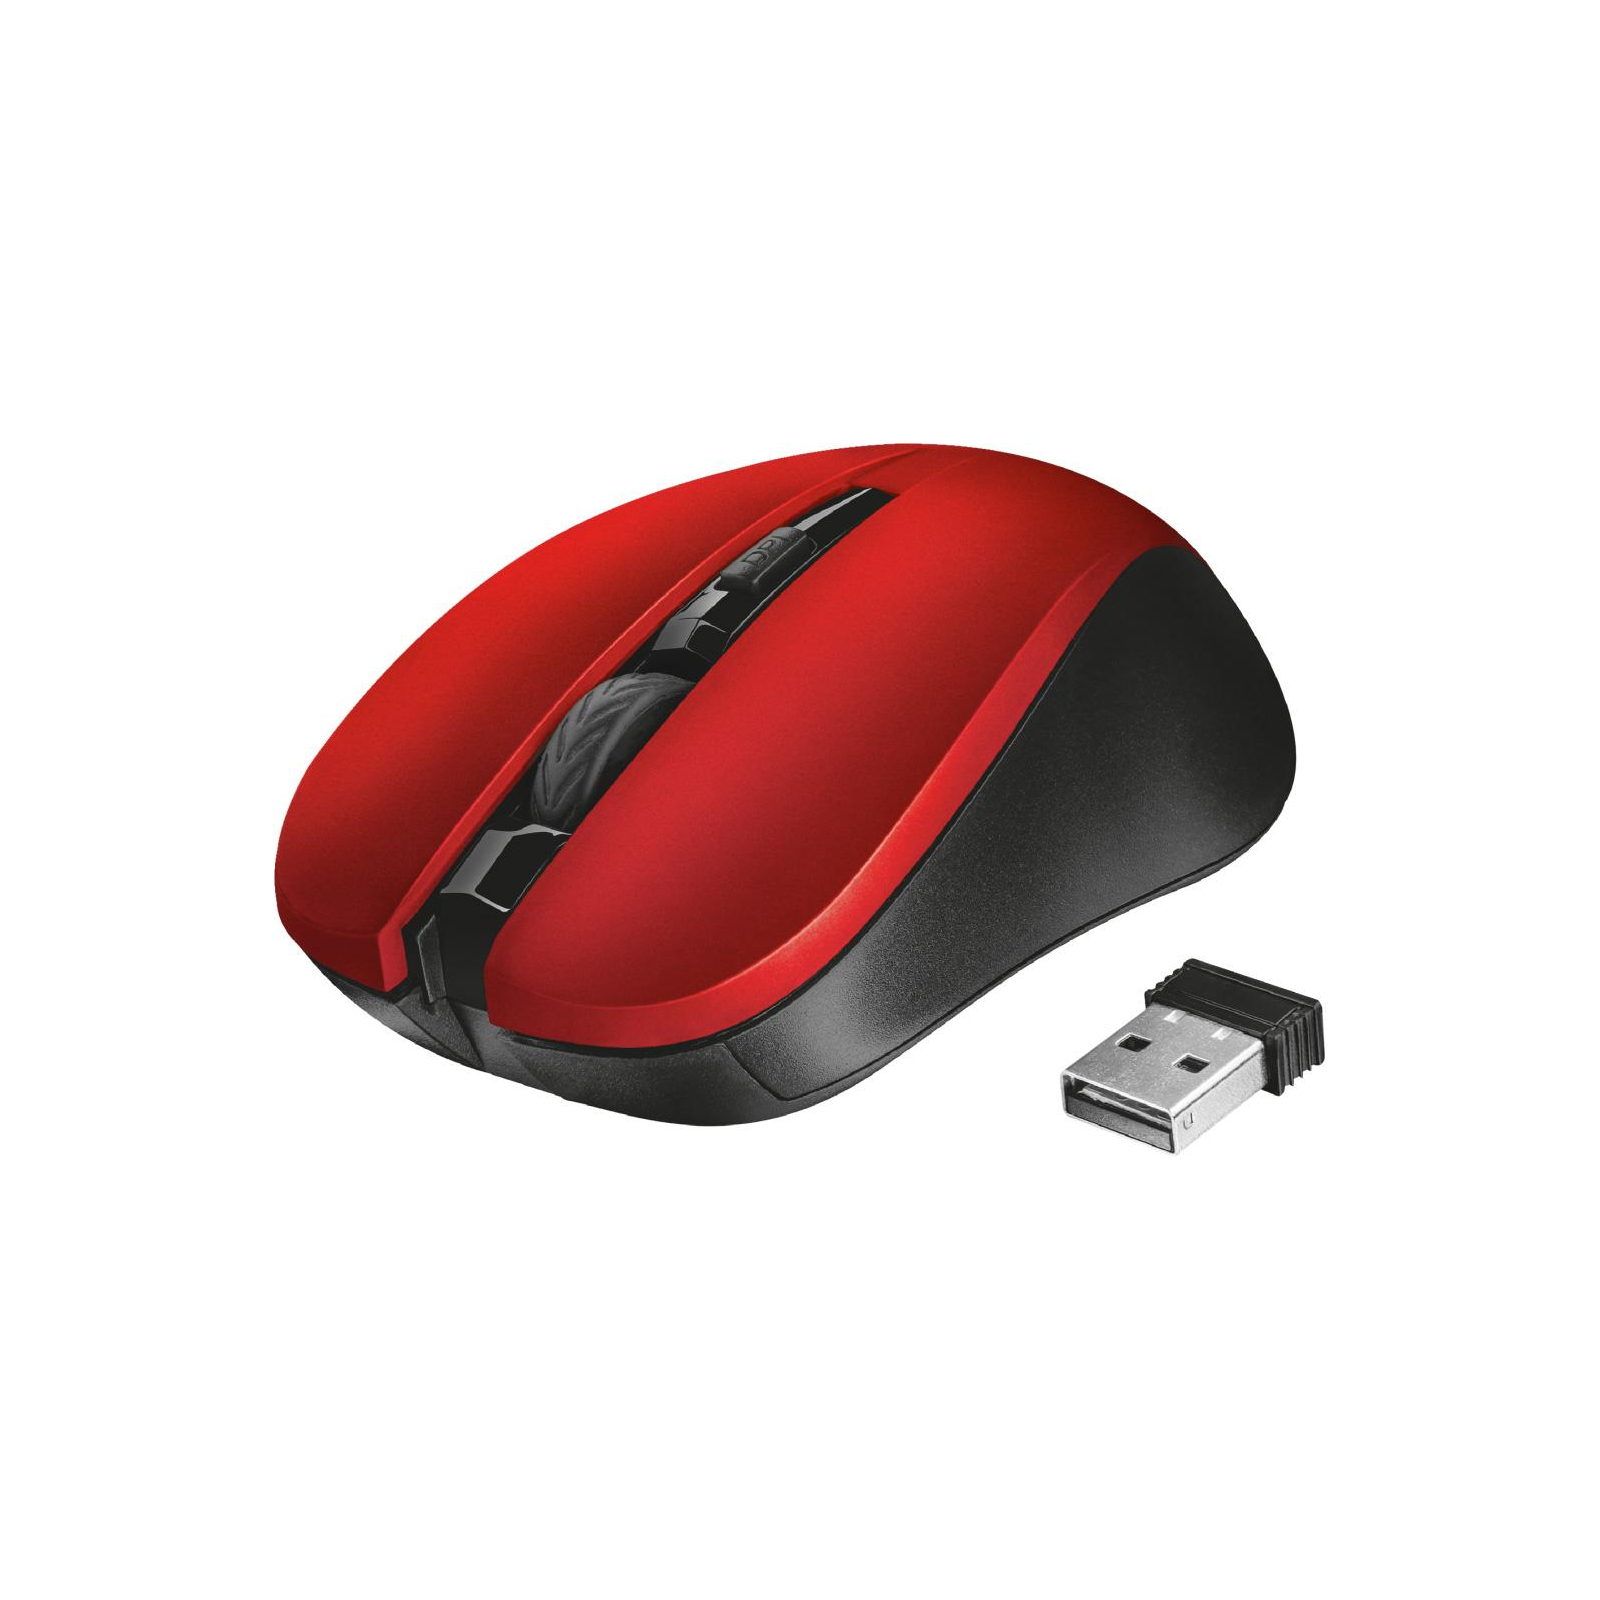 Мишка Trust Mydo Silent wireless mouse red (21871)